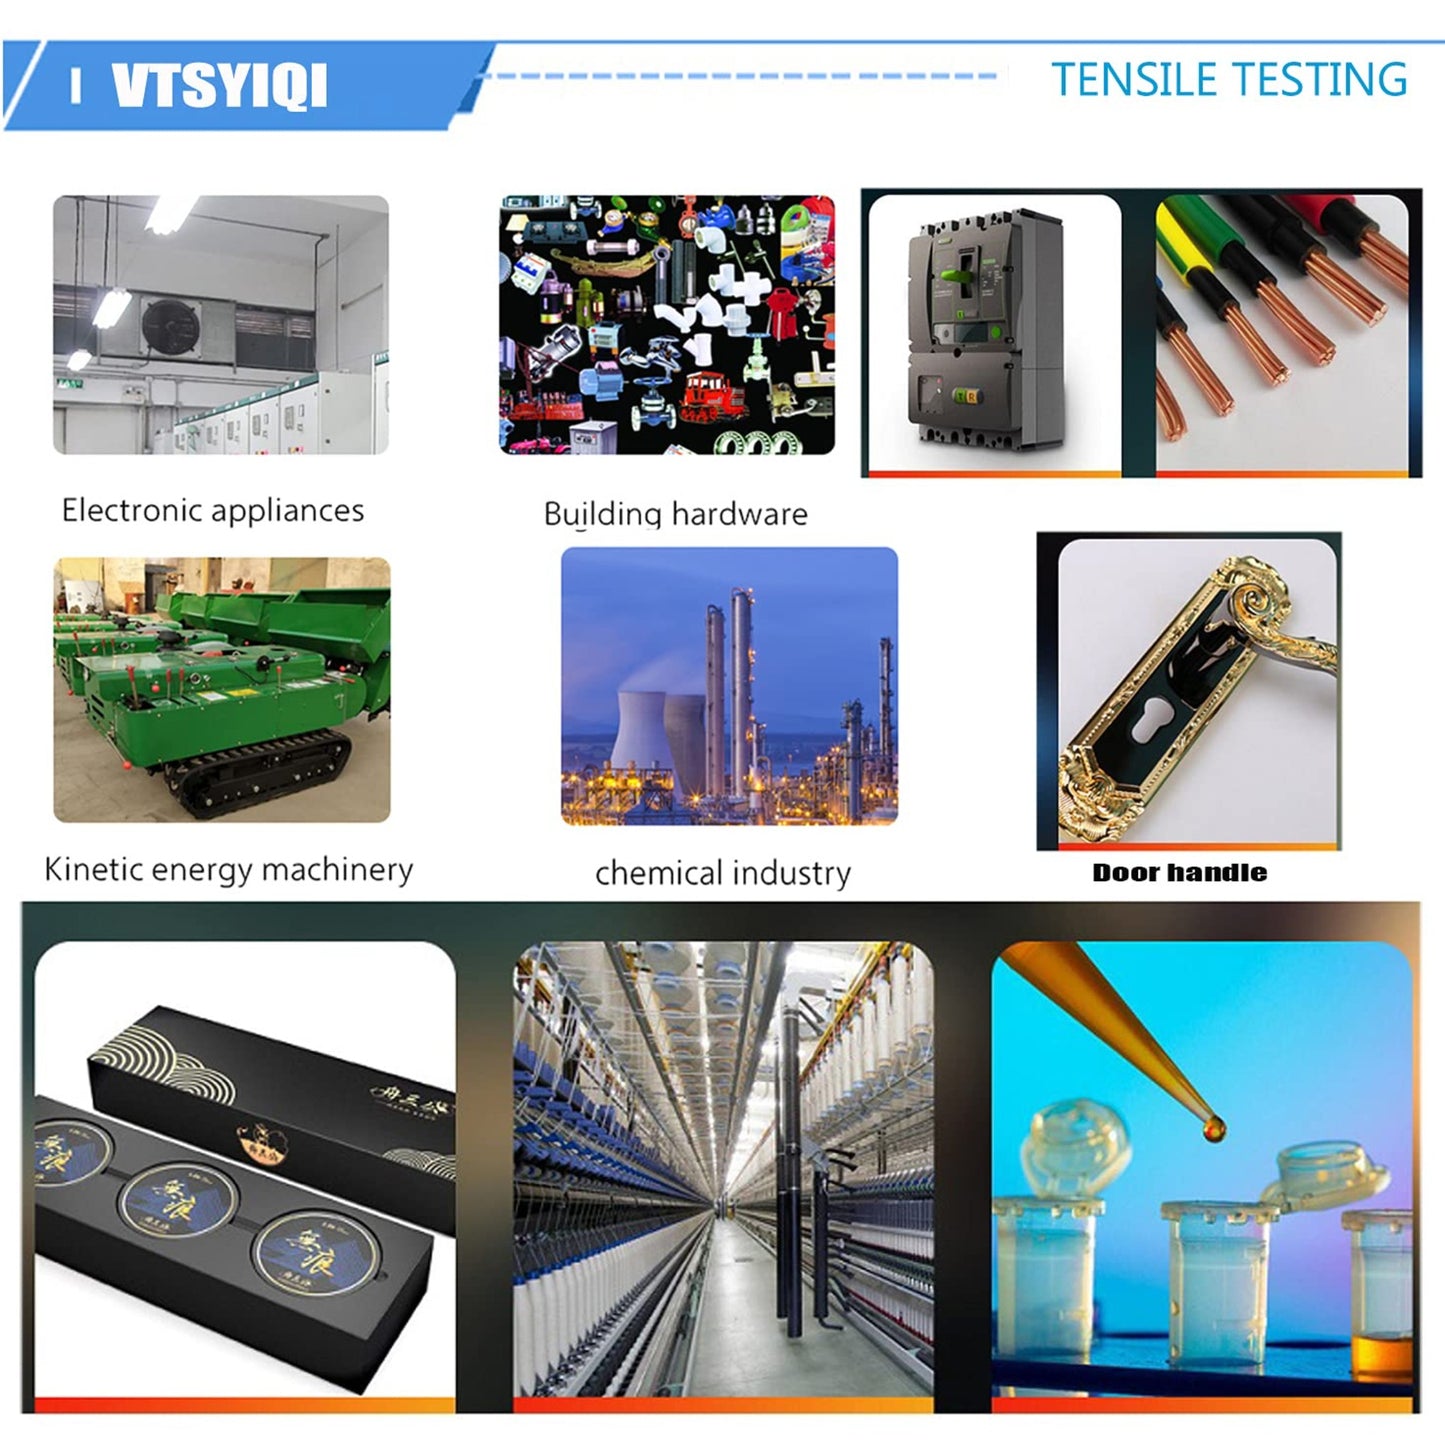 VTSYIQI Digital Force Gauge Push and Pull Tester of 4 Measurement Units 30kgf 300N 65Lbf 1080Oz LCD Measuring Instruments